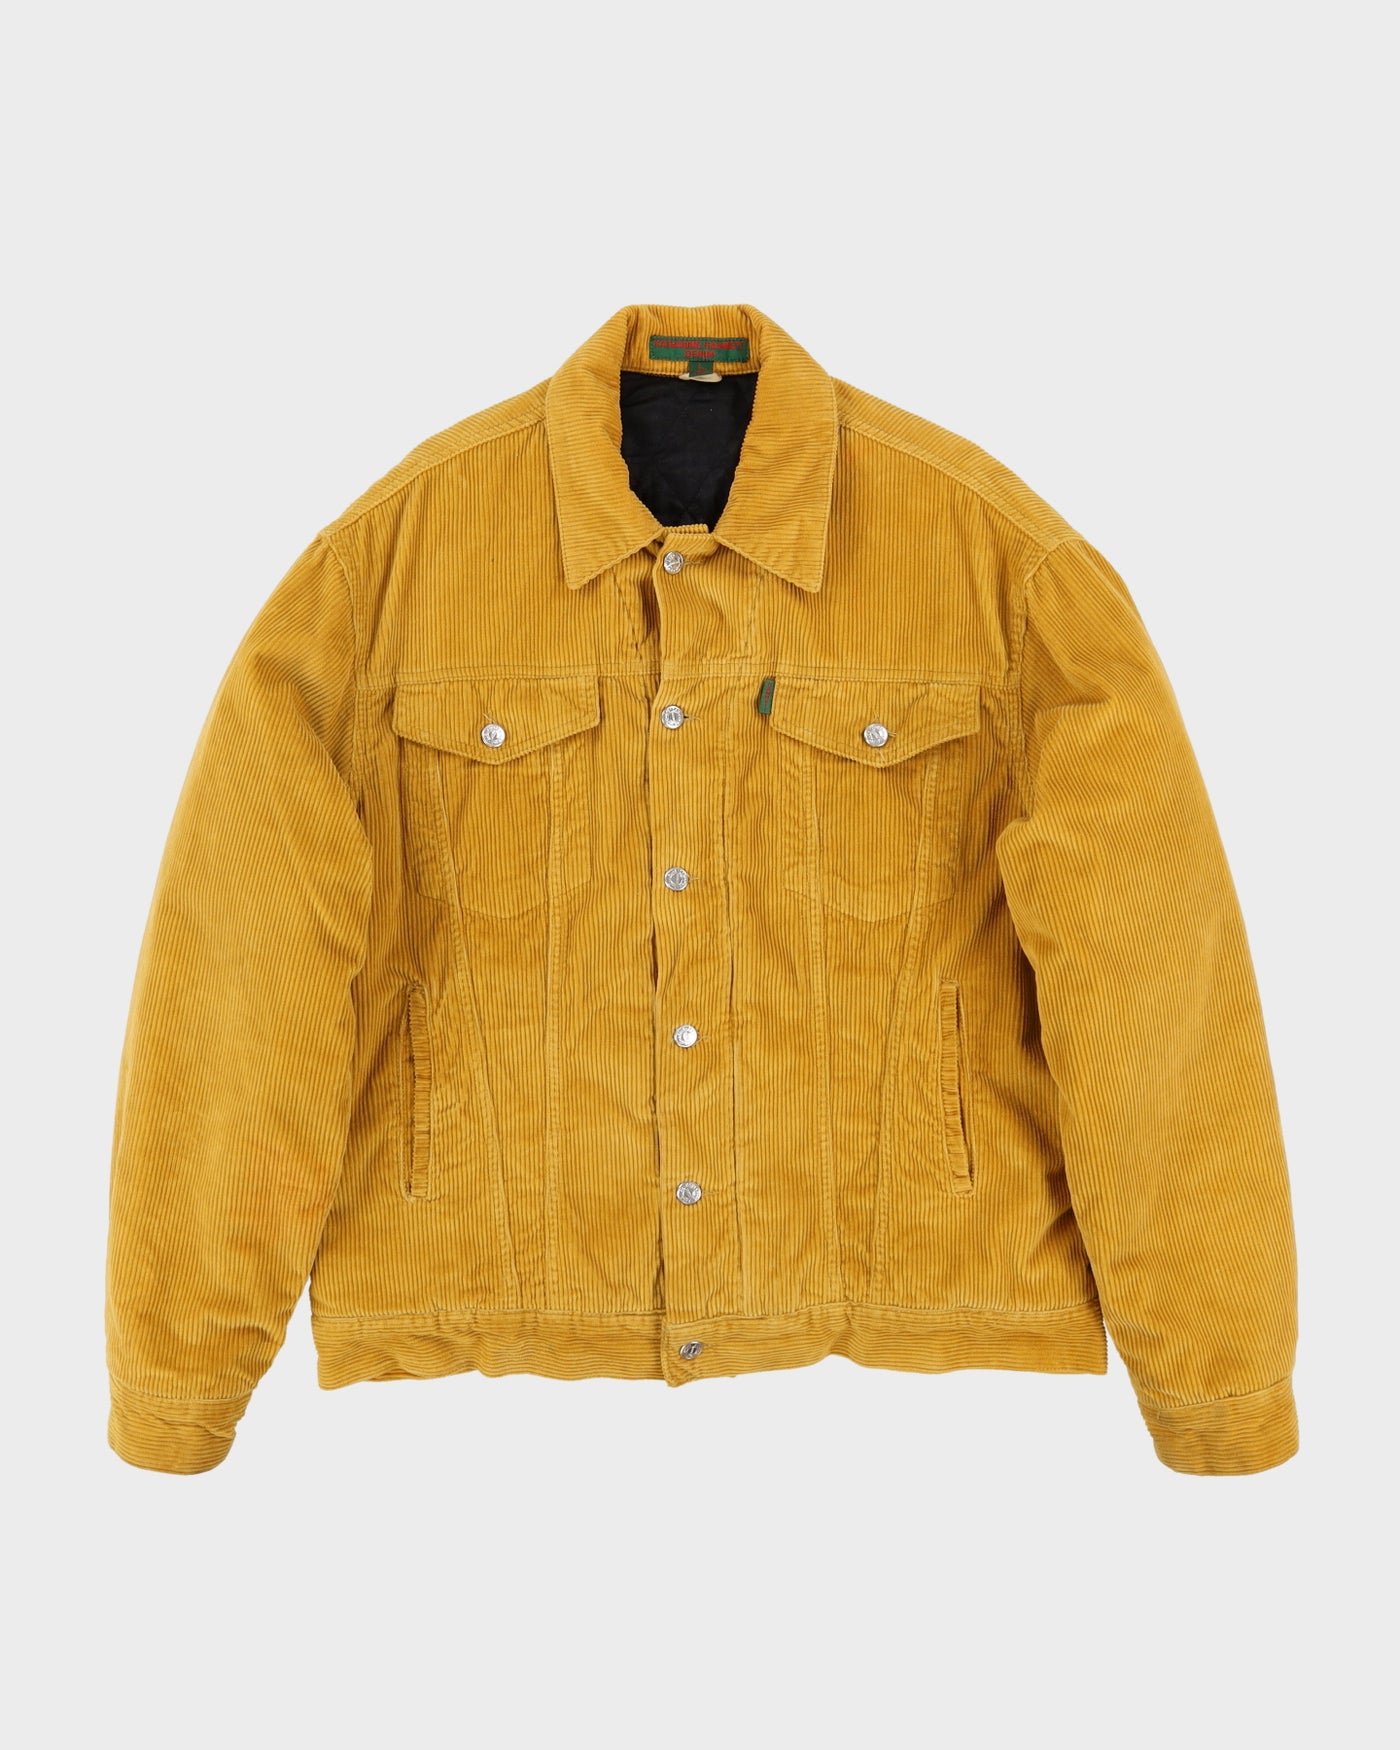 Katherine Hamnett Mustard Yellow Cord Jacket - L